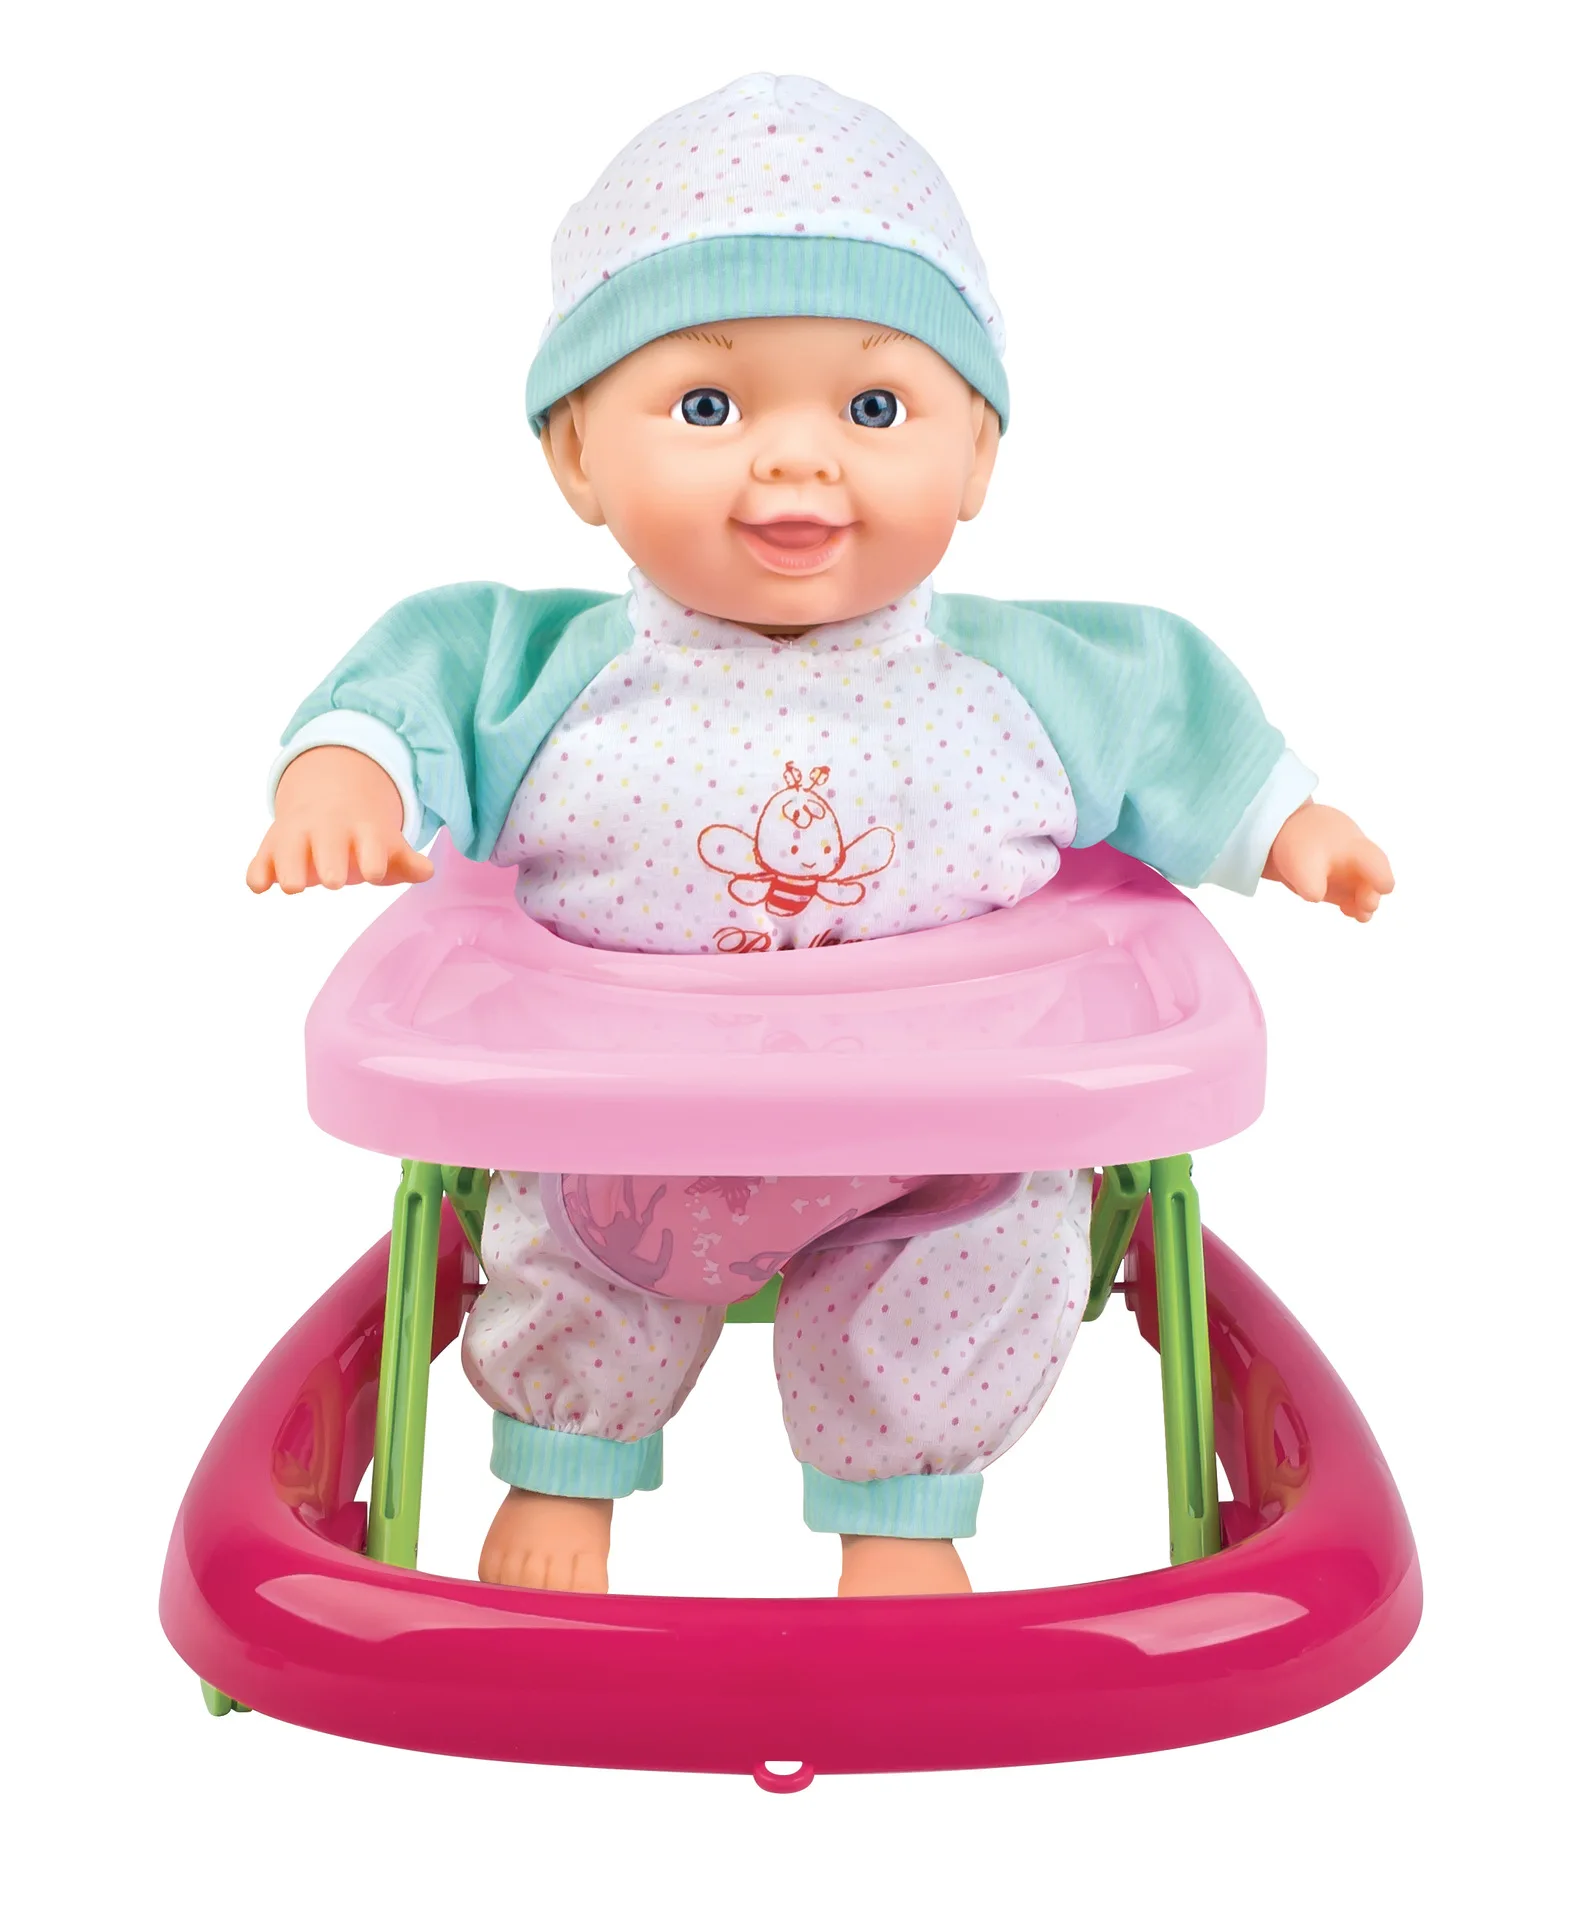 baby walker for dolls